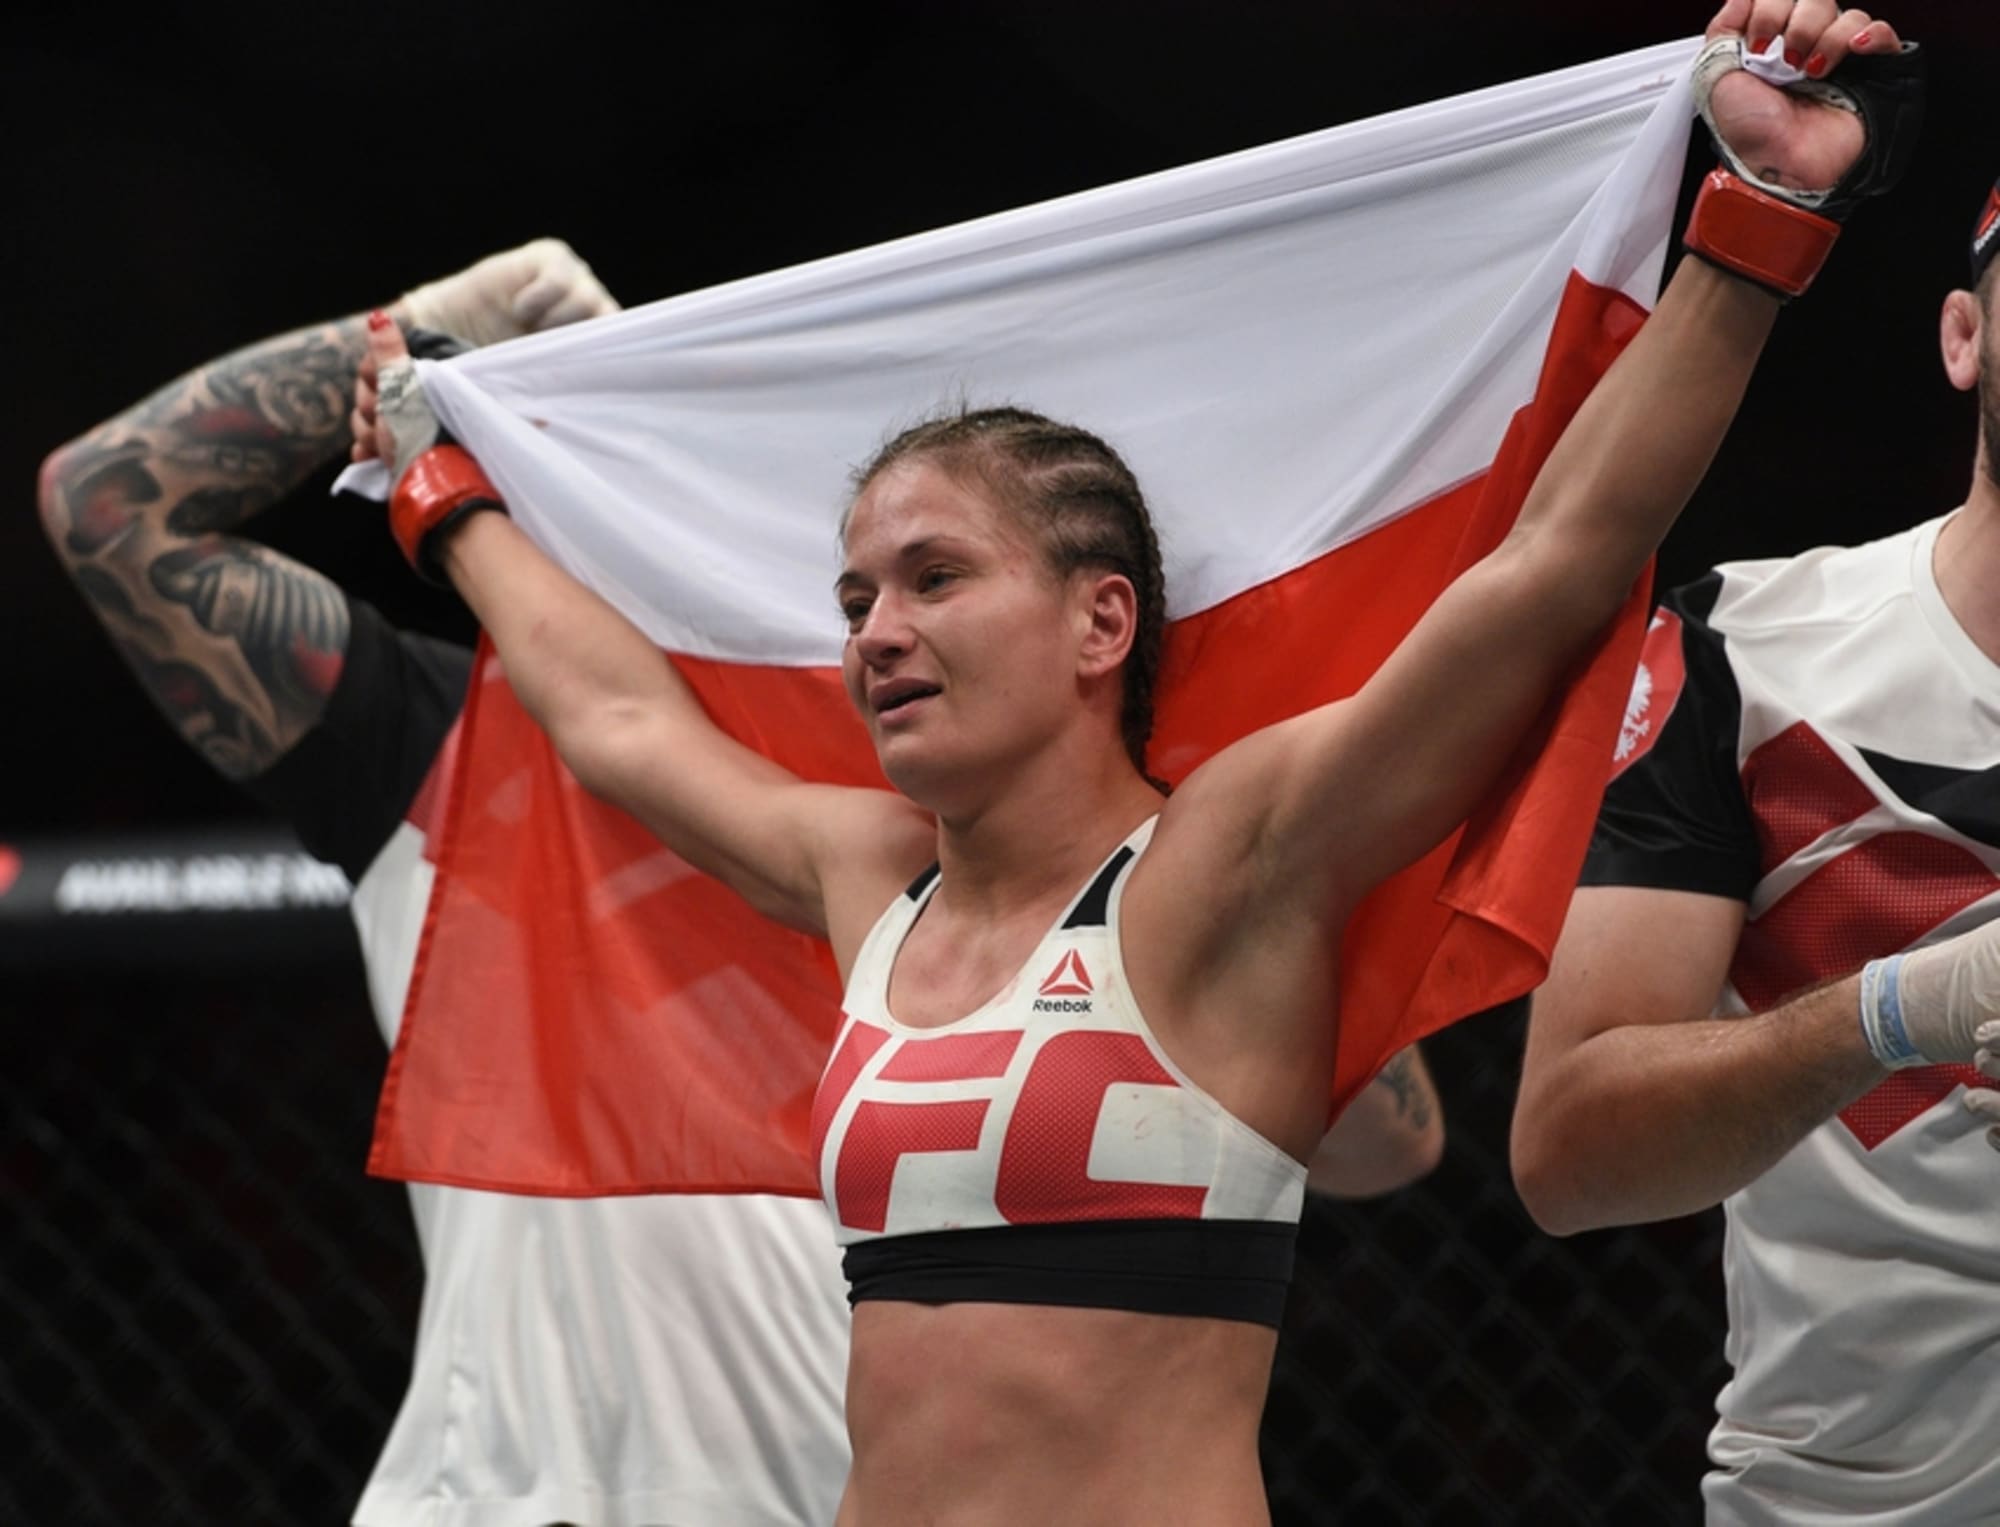 Ved daggry ego Observatory UFC 201 results and highlights: Karolina Kowalkiewicz vs. Rose Namajunas